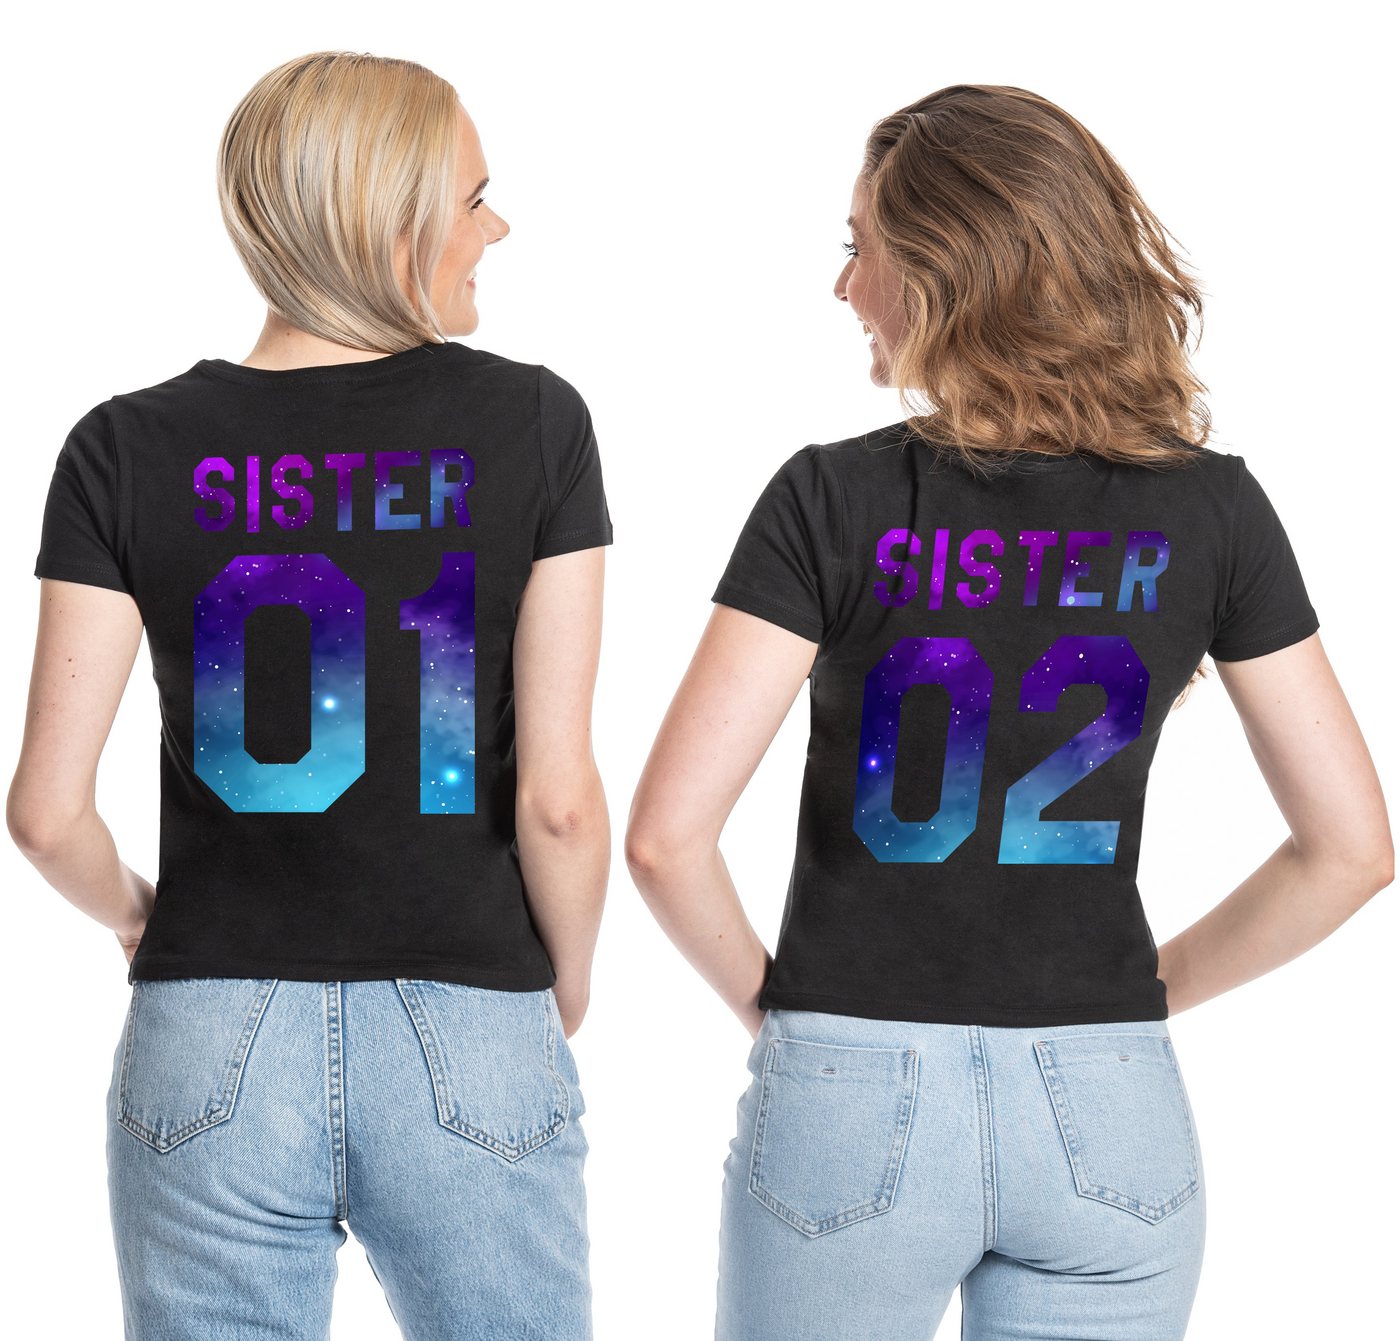 Couples Shop T-Shirt Sister 01 & Sister 02 Night Beste Freunde Damen Shirt mit trendigem Print von Couples Shop